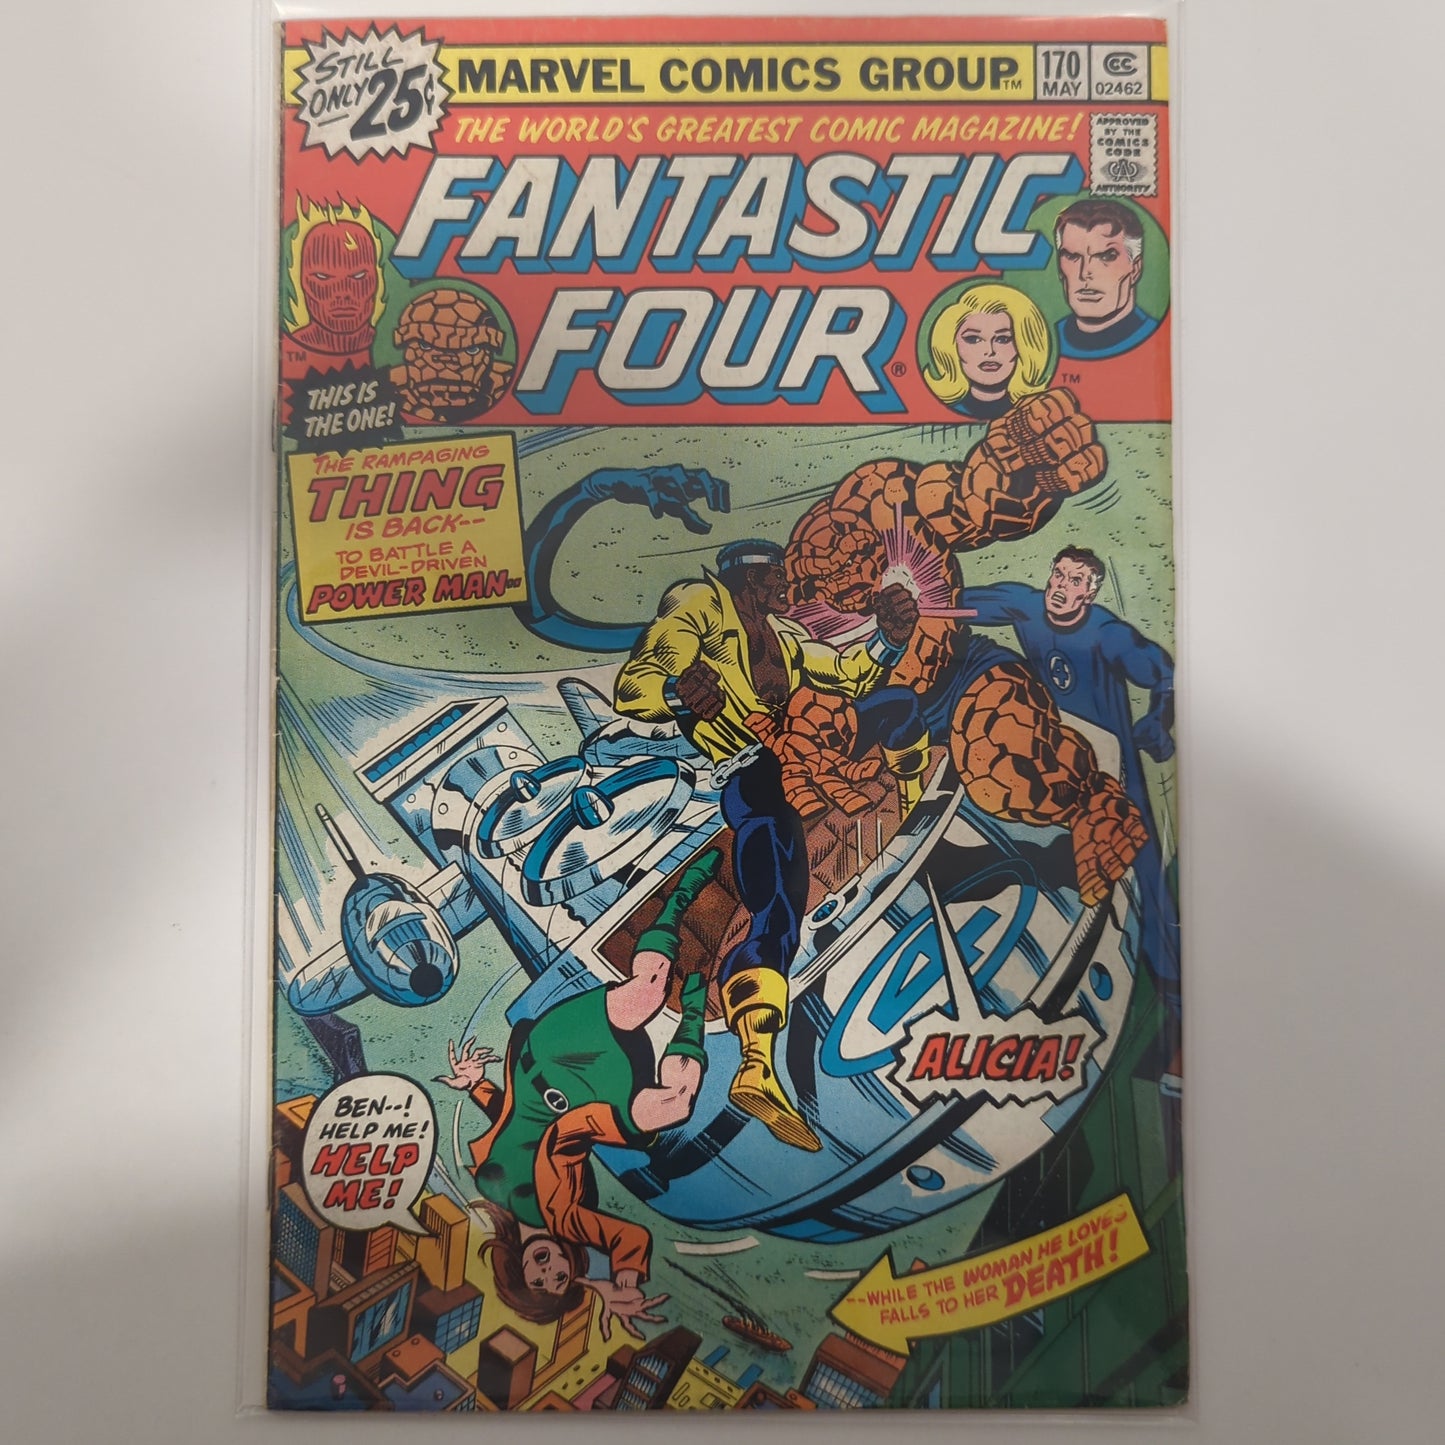 Fantastic Four #170